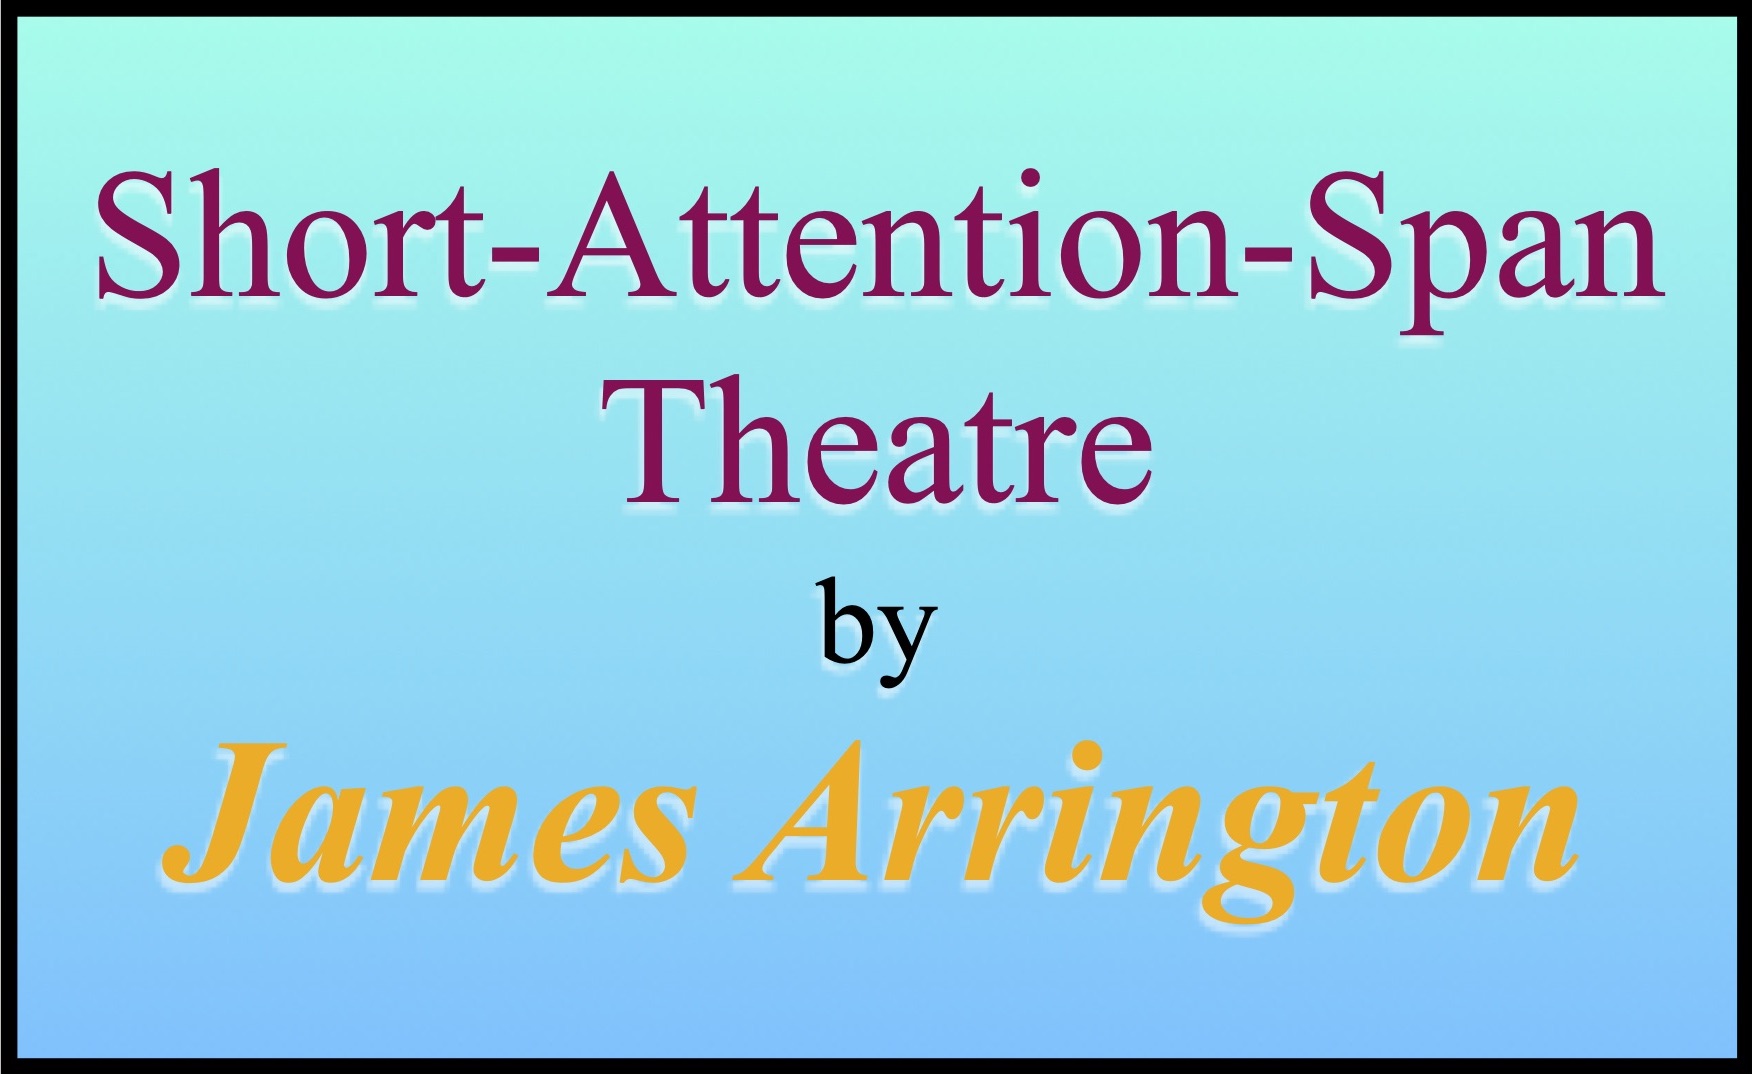 Short-Attention-Span Theatre by James Arrington